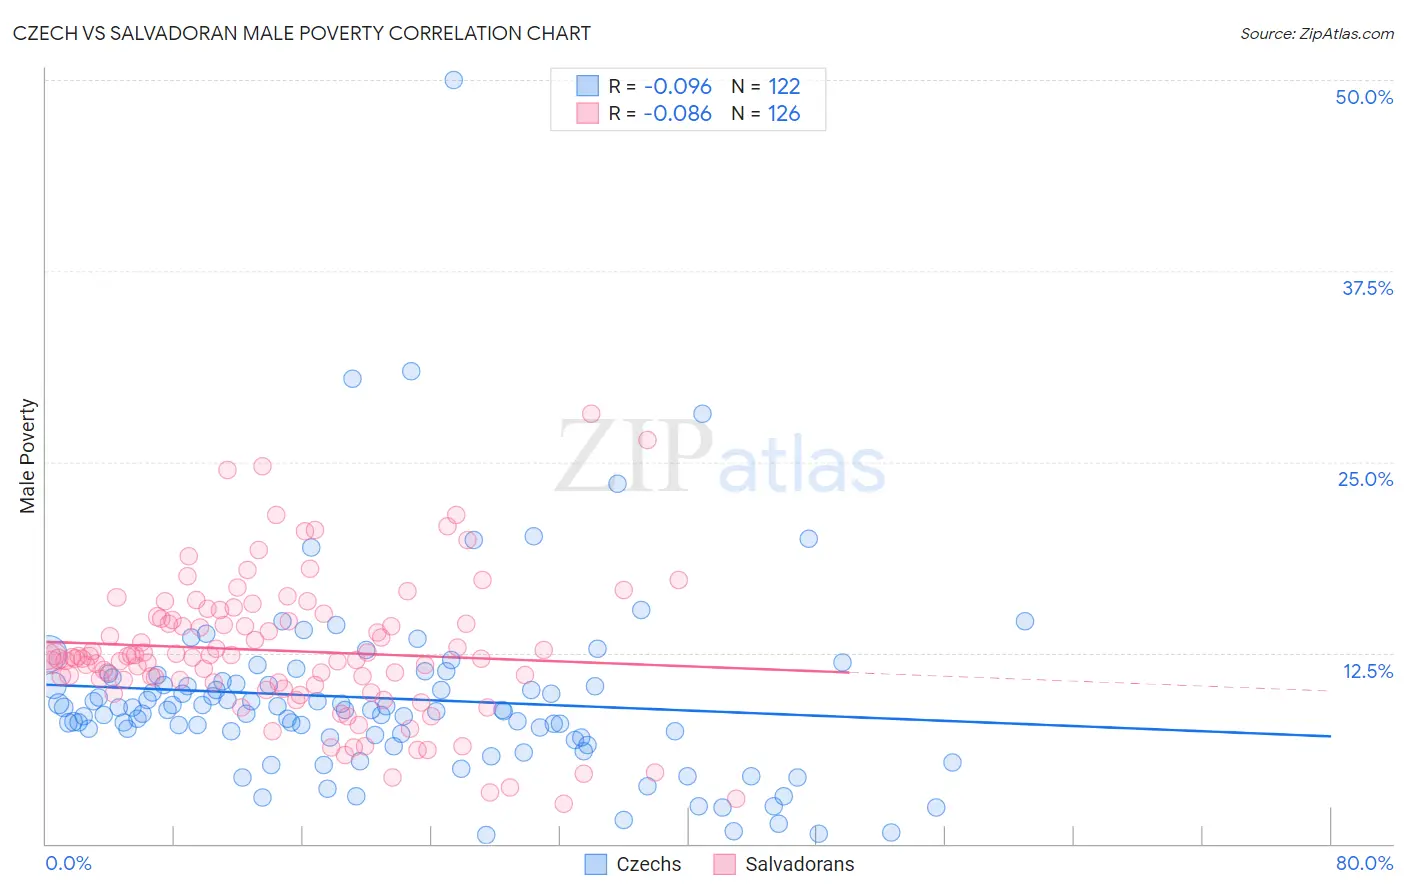 Czech vs Salvadoran Male Poverty